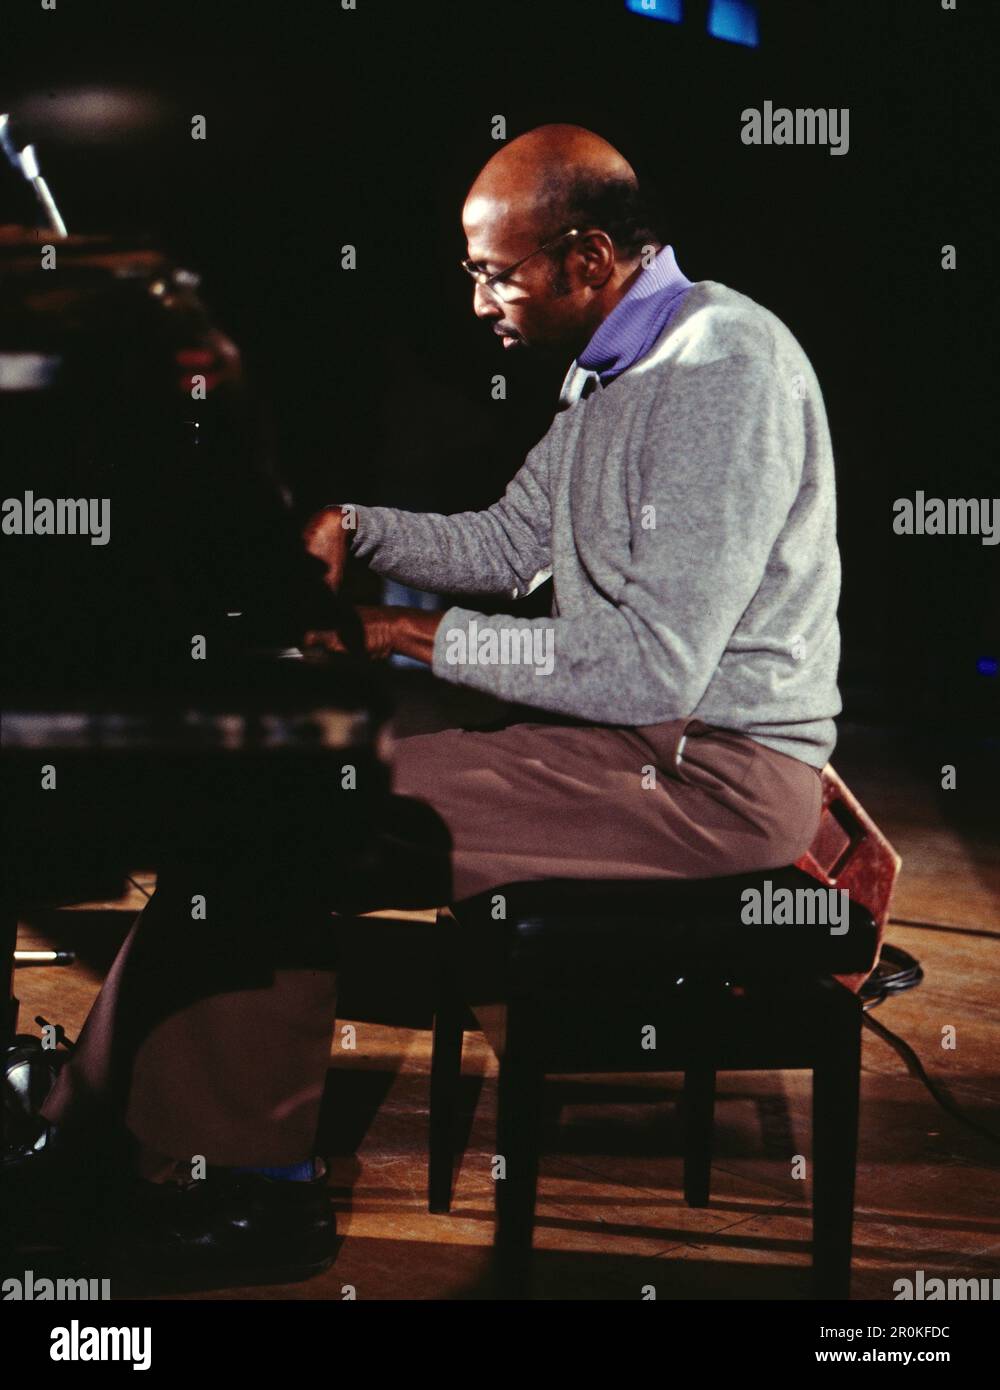 Horace Parlan, amerikanischer Jazzpianist, Portrait am piano, Deutschland, 1986. Horace Parlan, pianista jazz americano, ritratto al pianoforte, Germania, 1986. Foto Stock